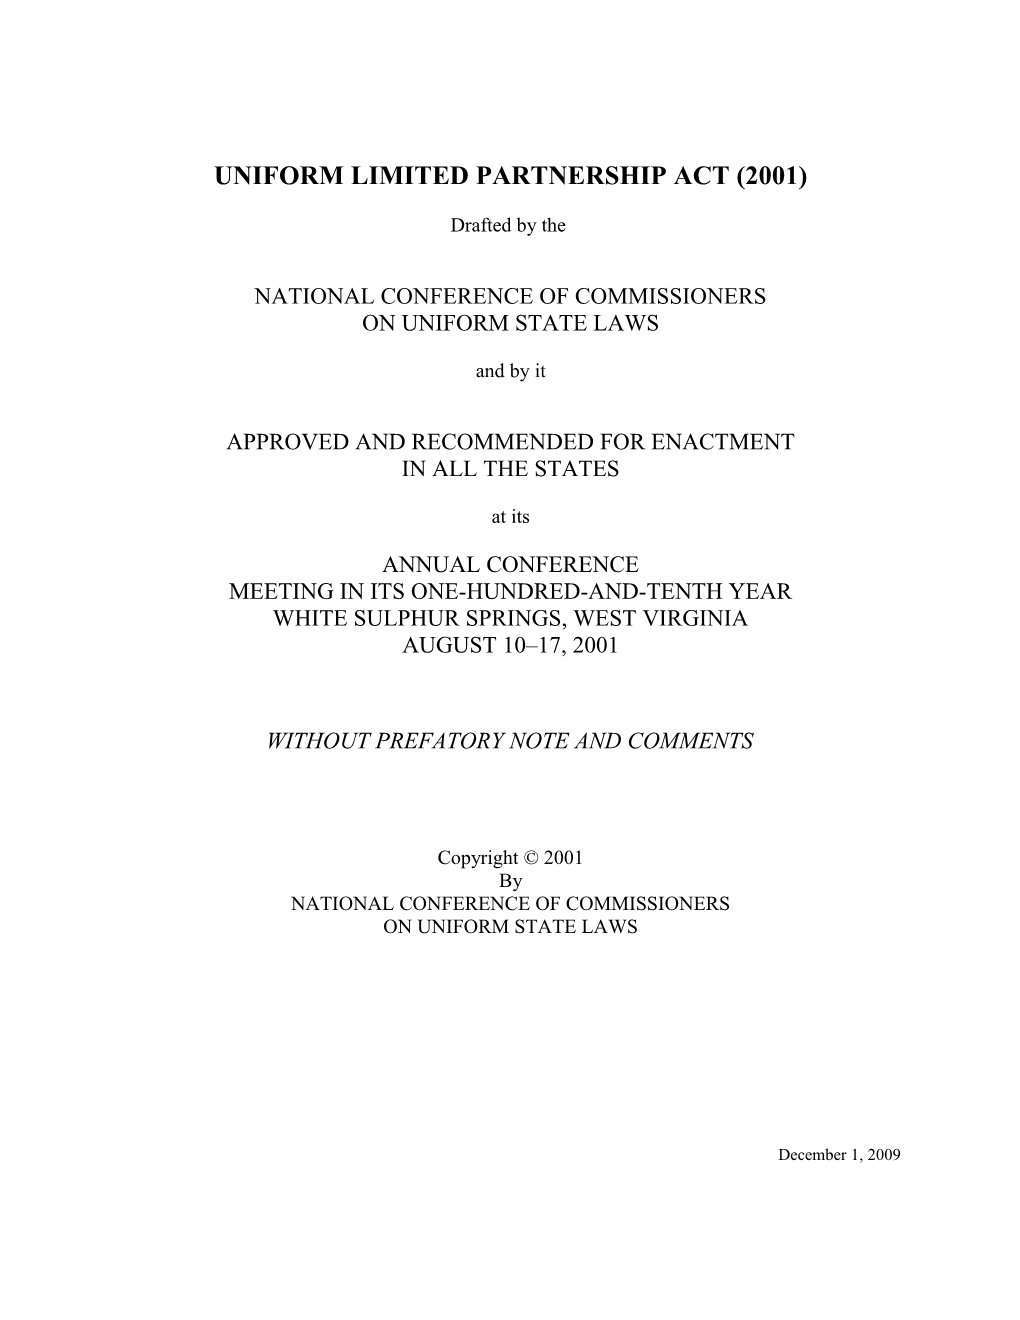 Uniform Limited Partnership Act (2001)